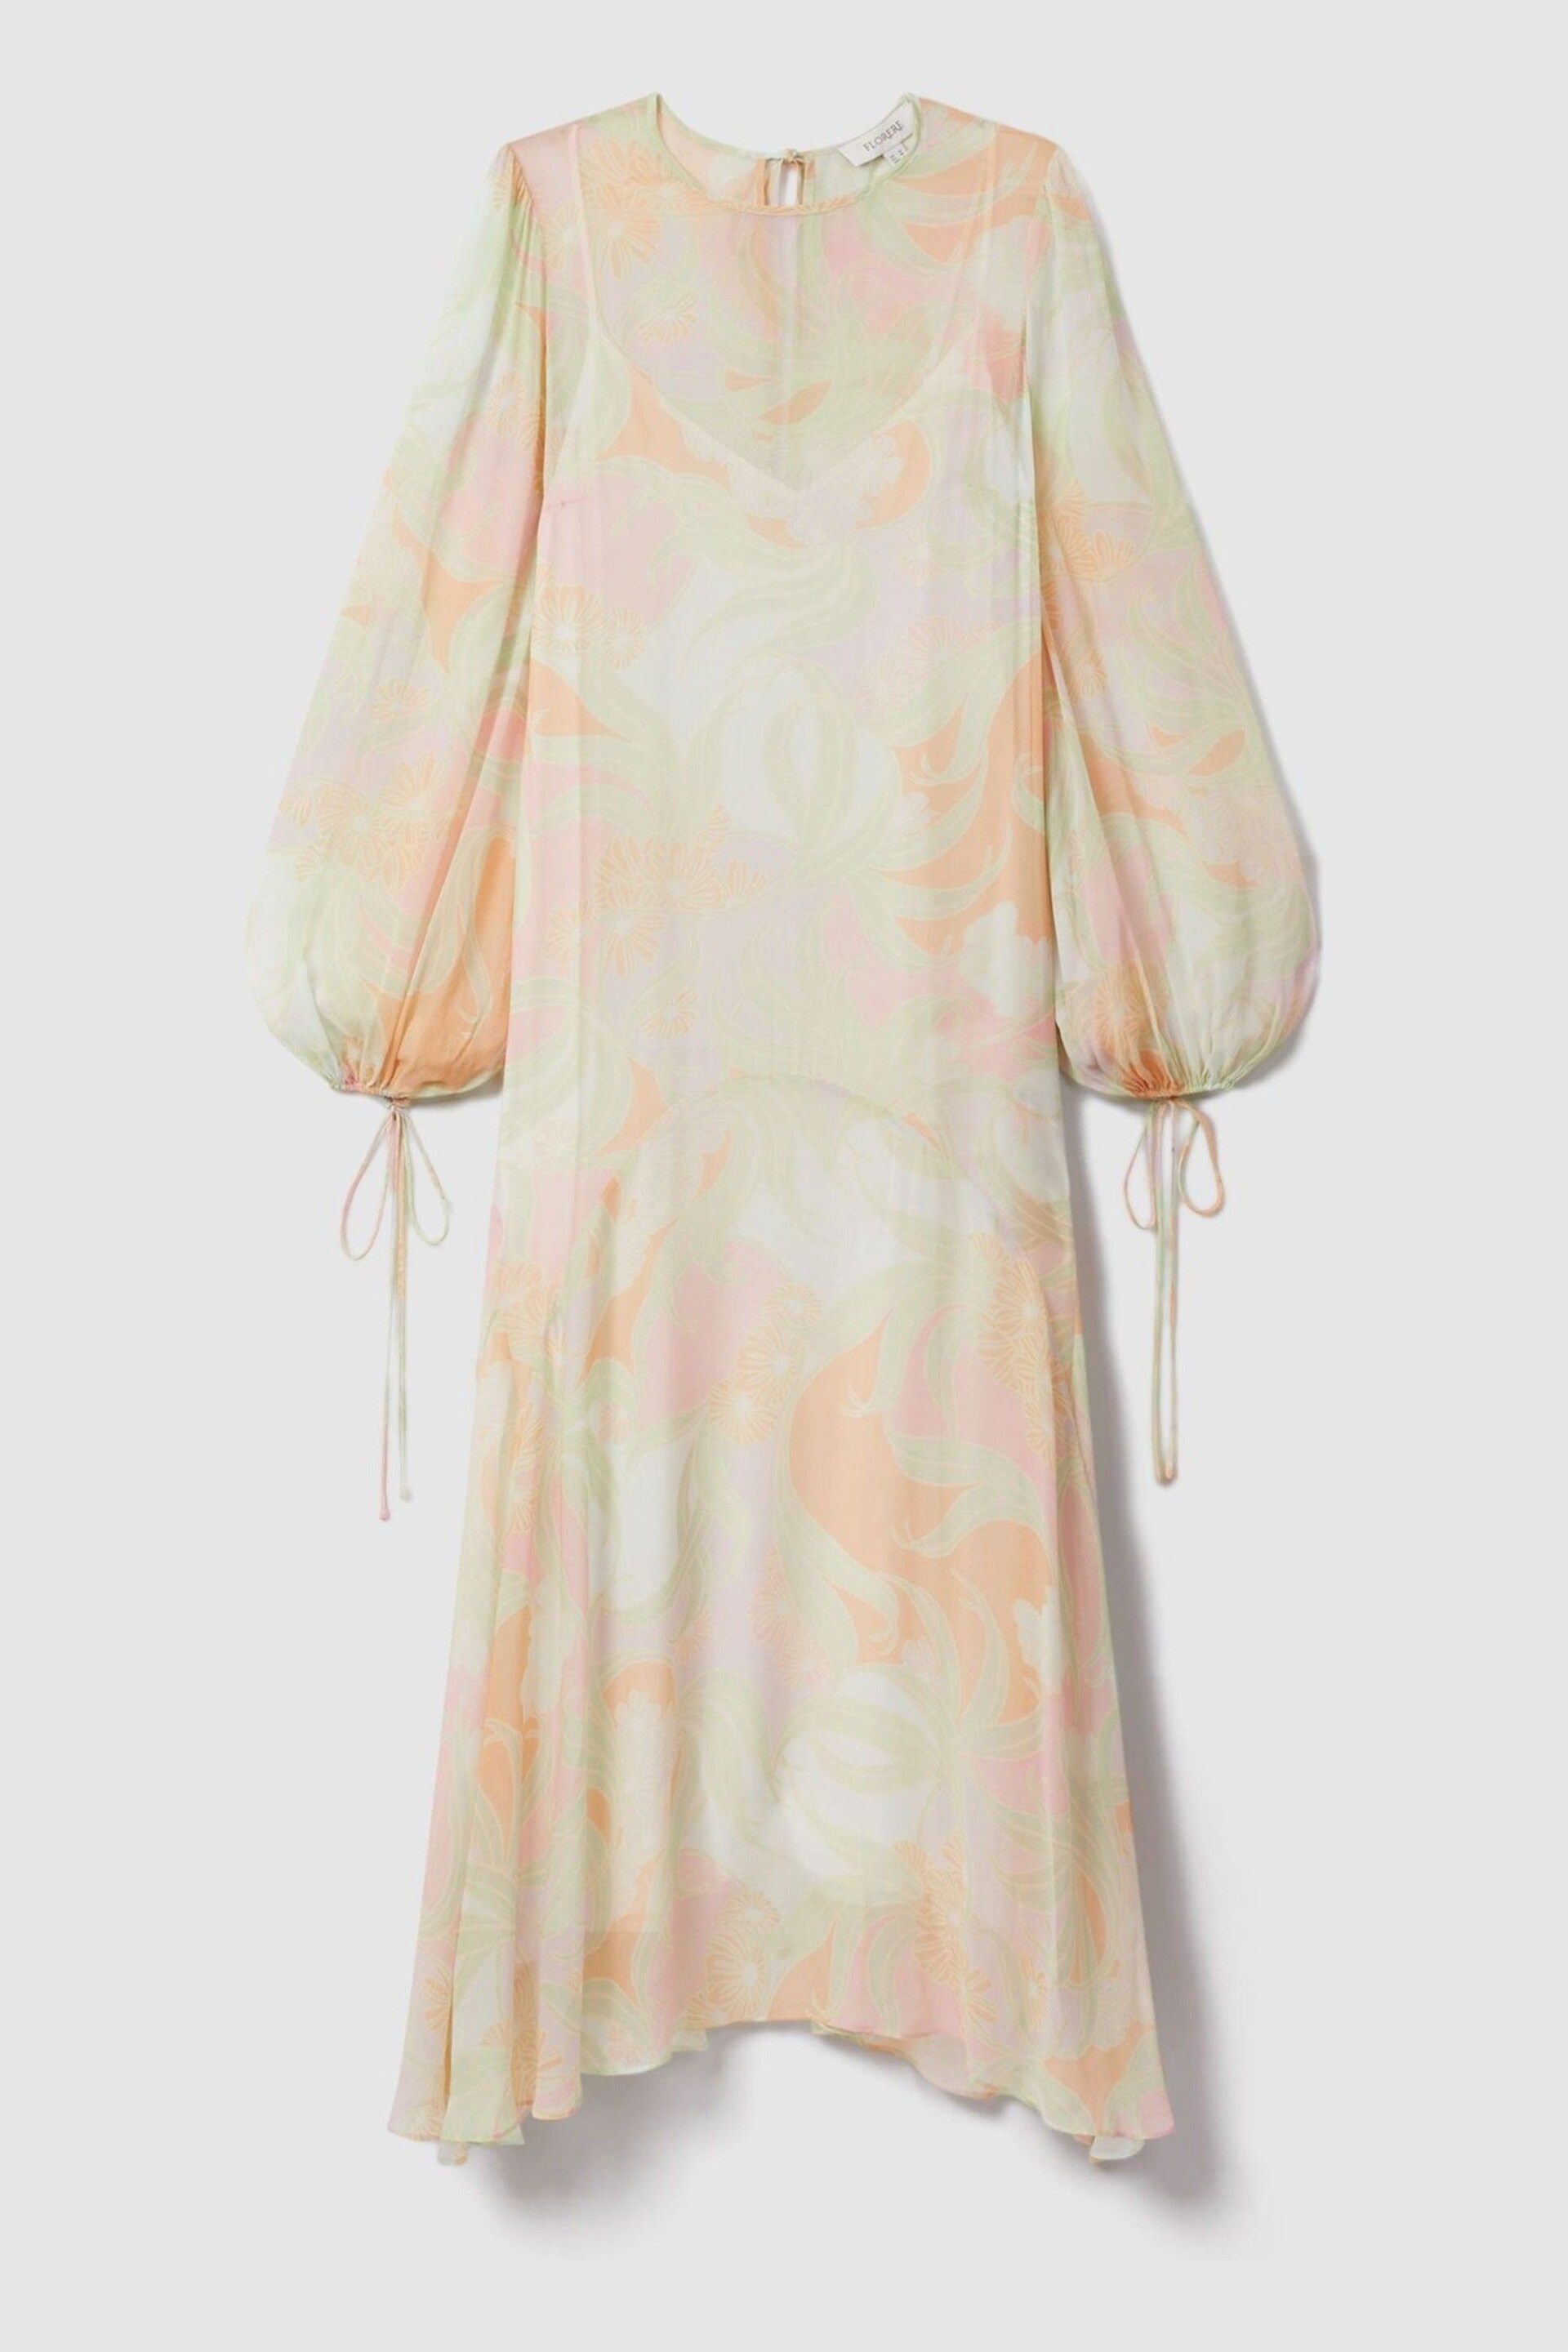 Florere Sheer Asymmetric Midi Dress - Image 4 of 5